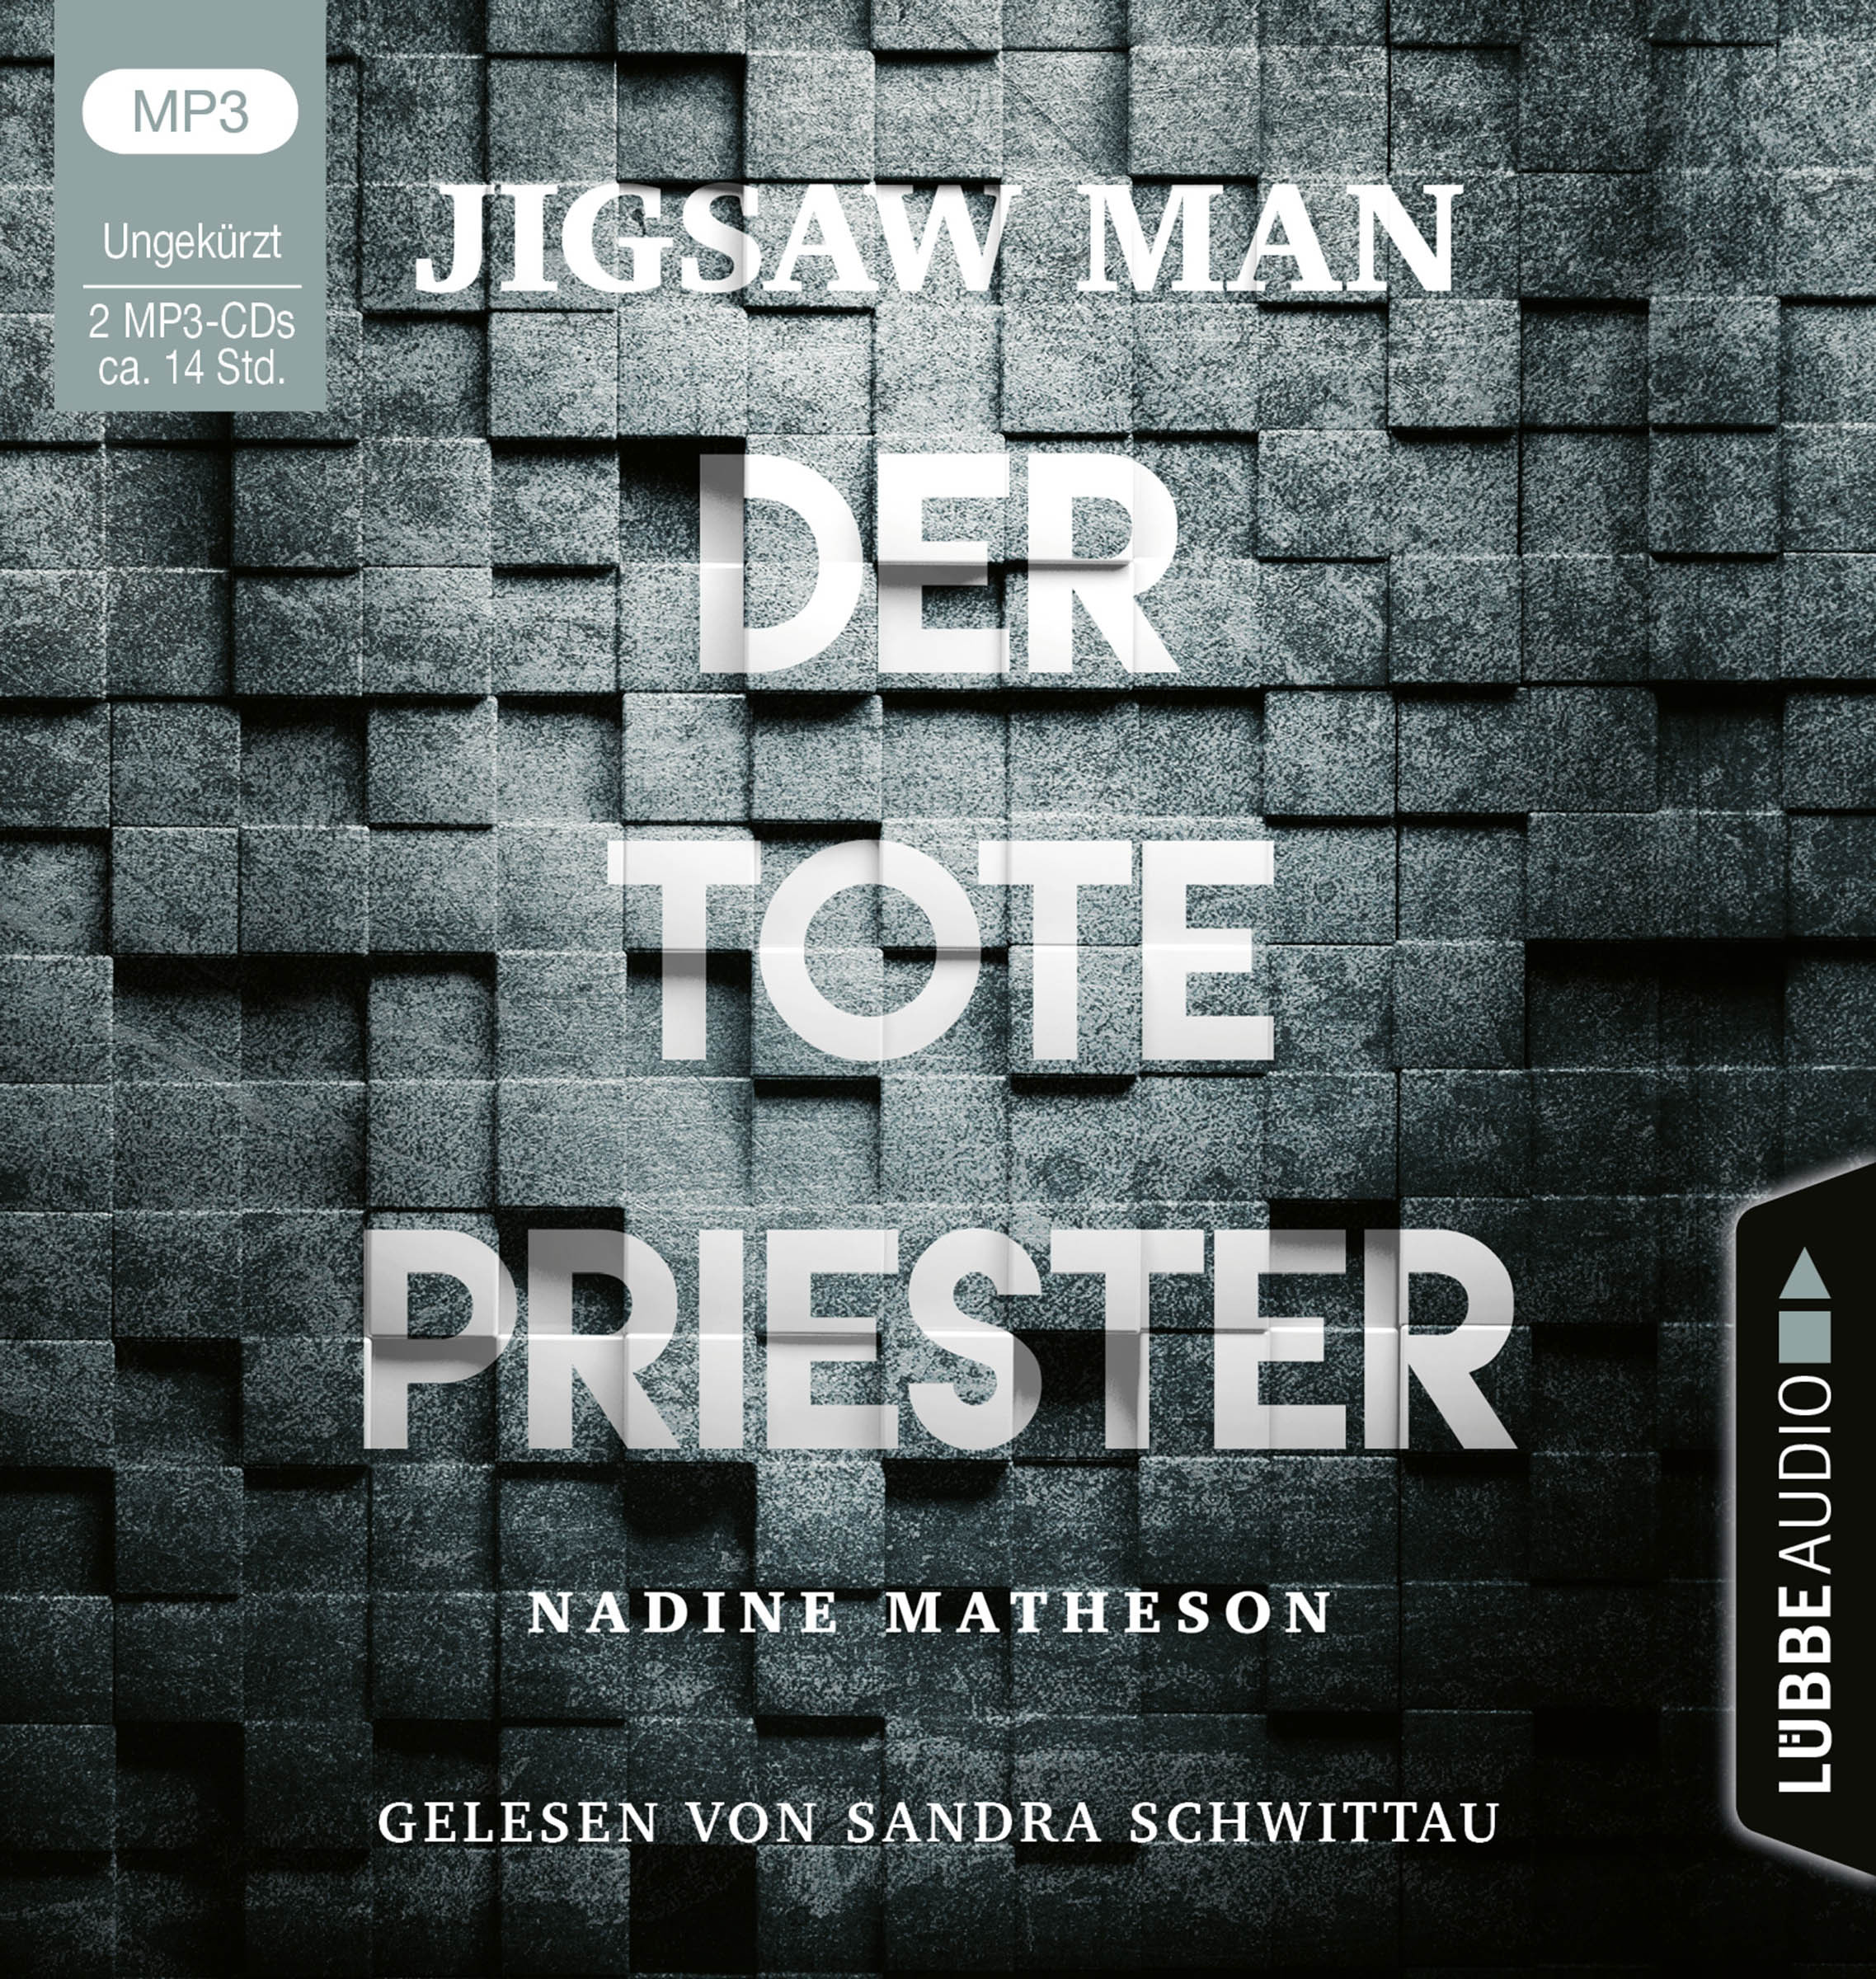 Nadine Matheson - Jigsaw Man - Der tote Priester